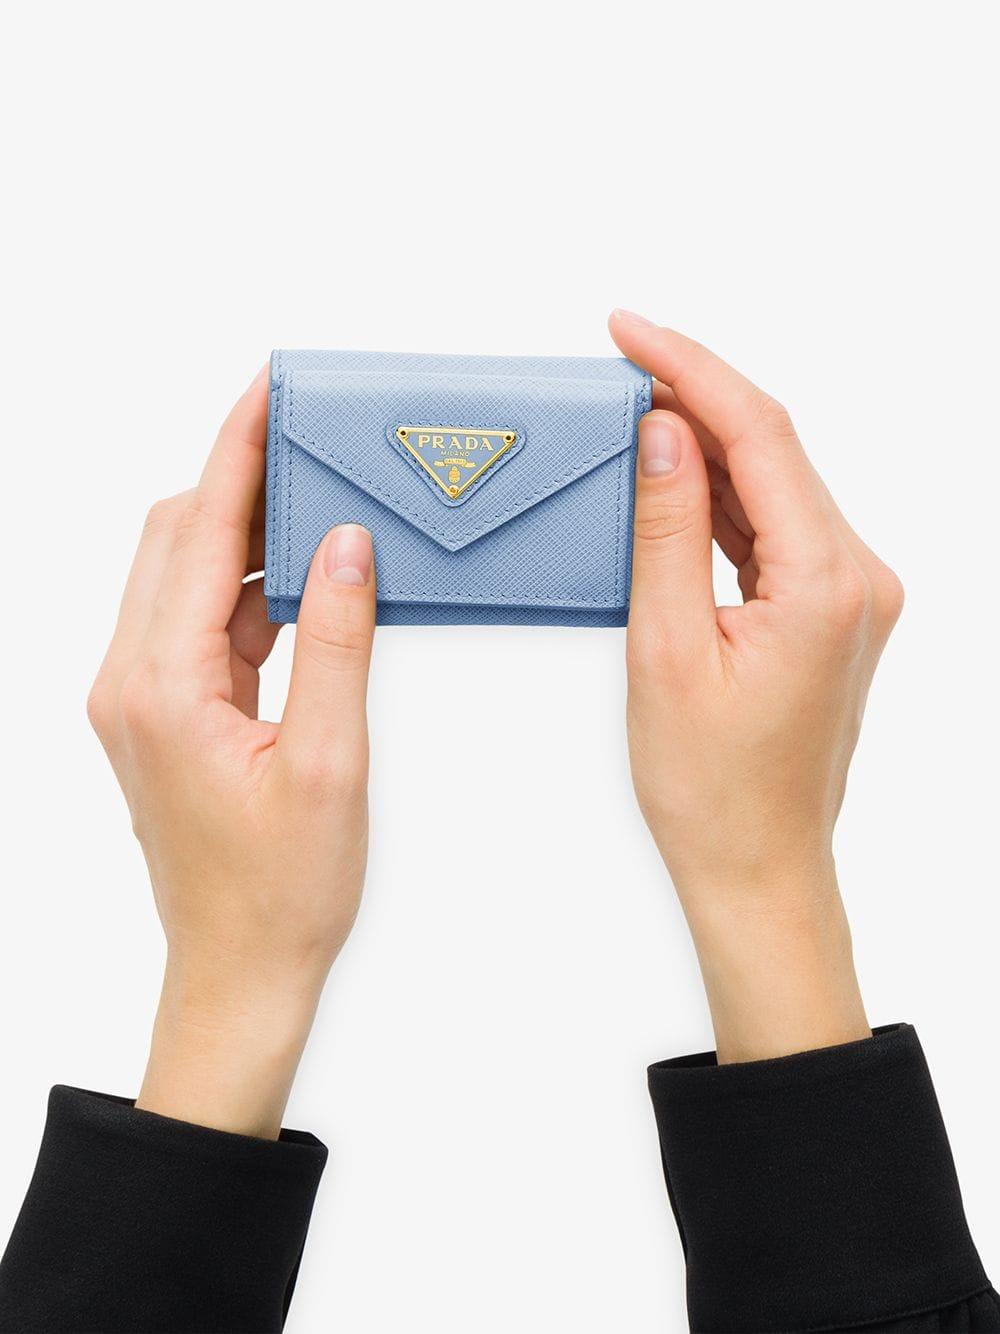 Prada Saffiano Small Wallet in Blue | Lyst UK